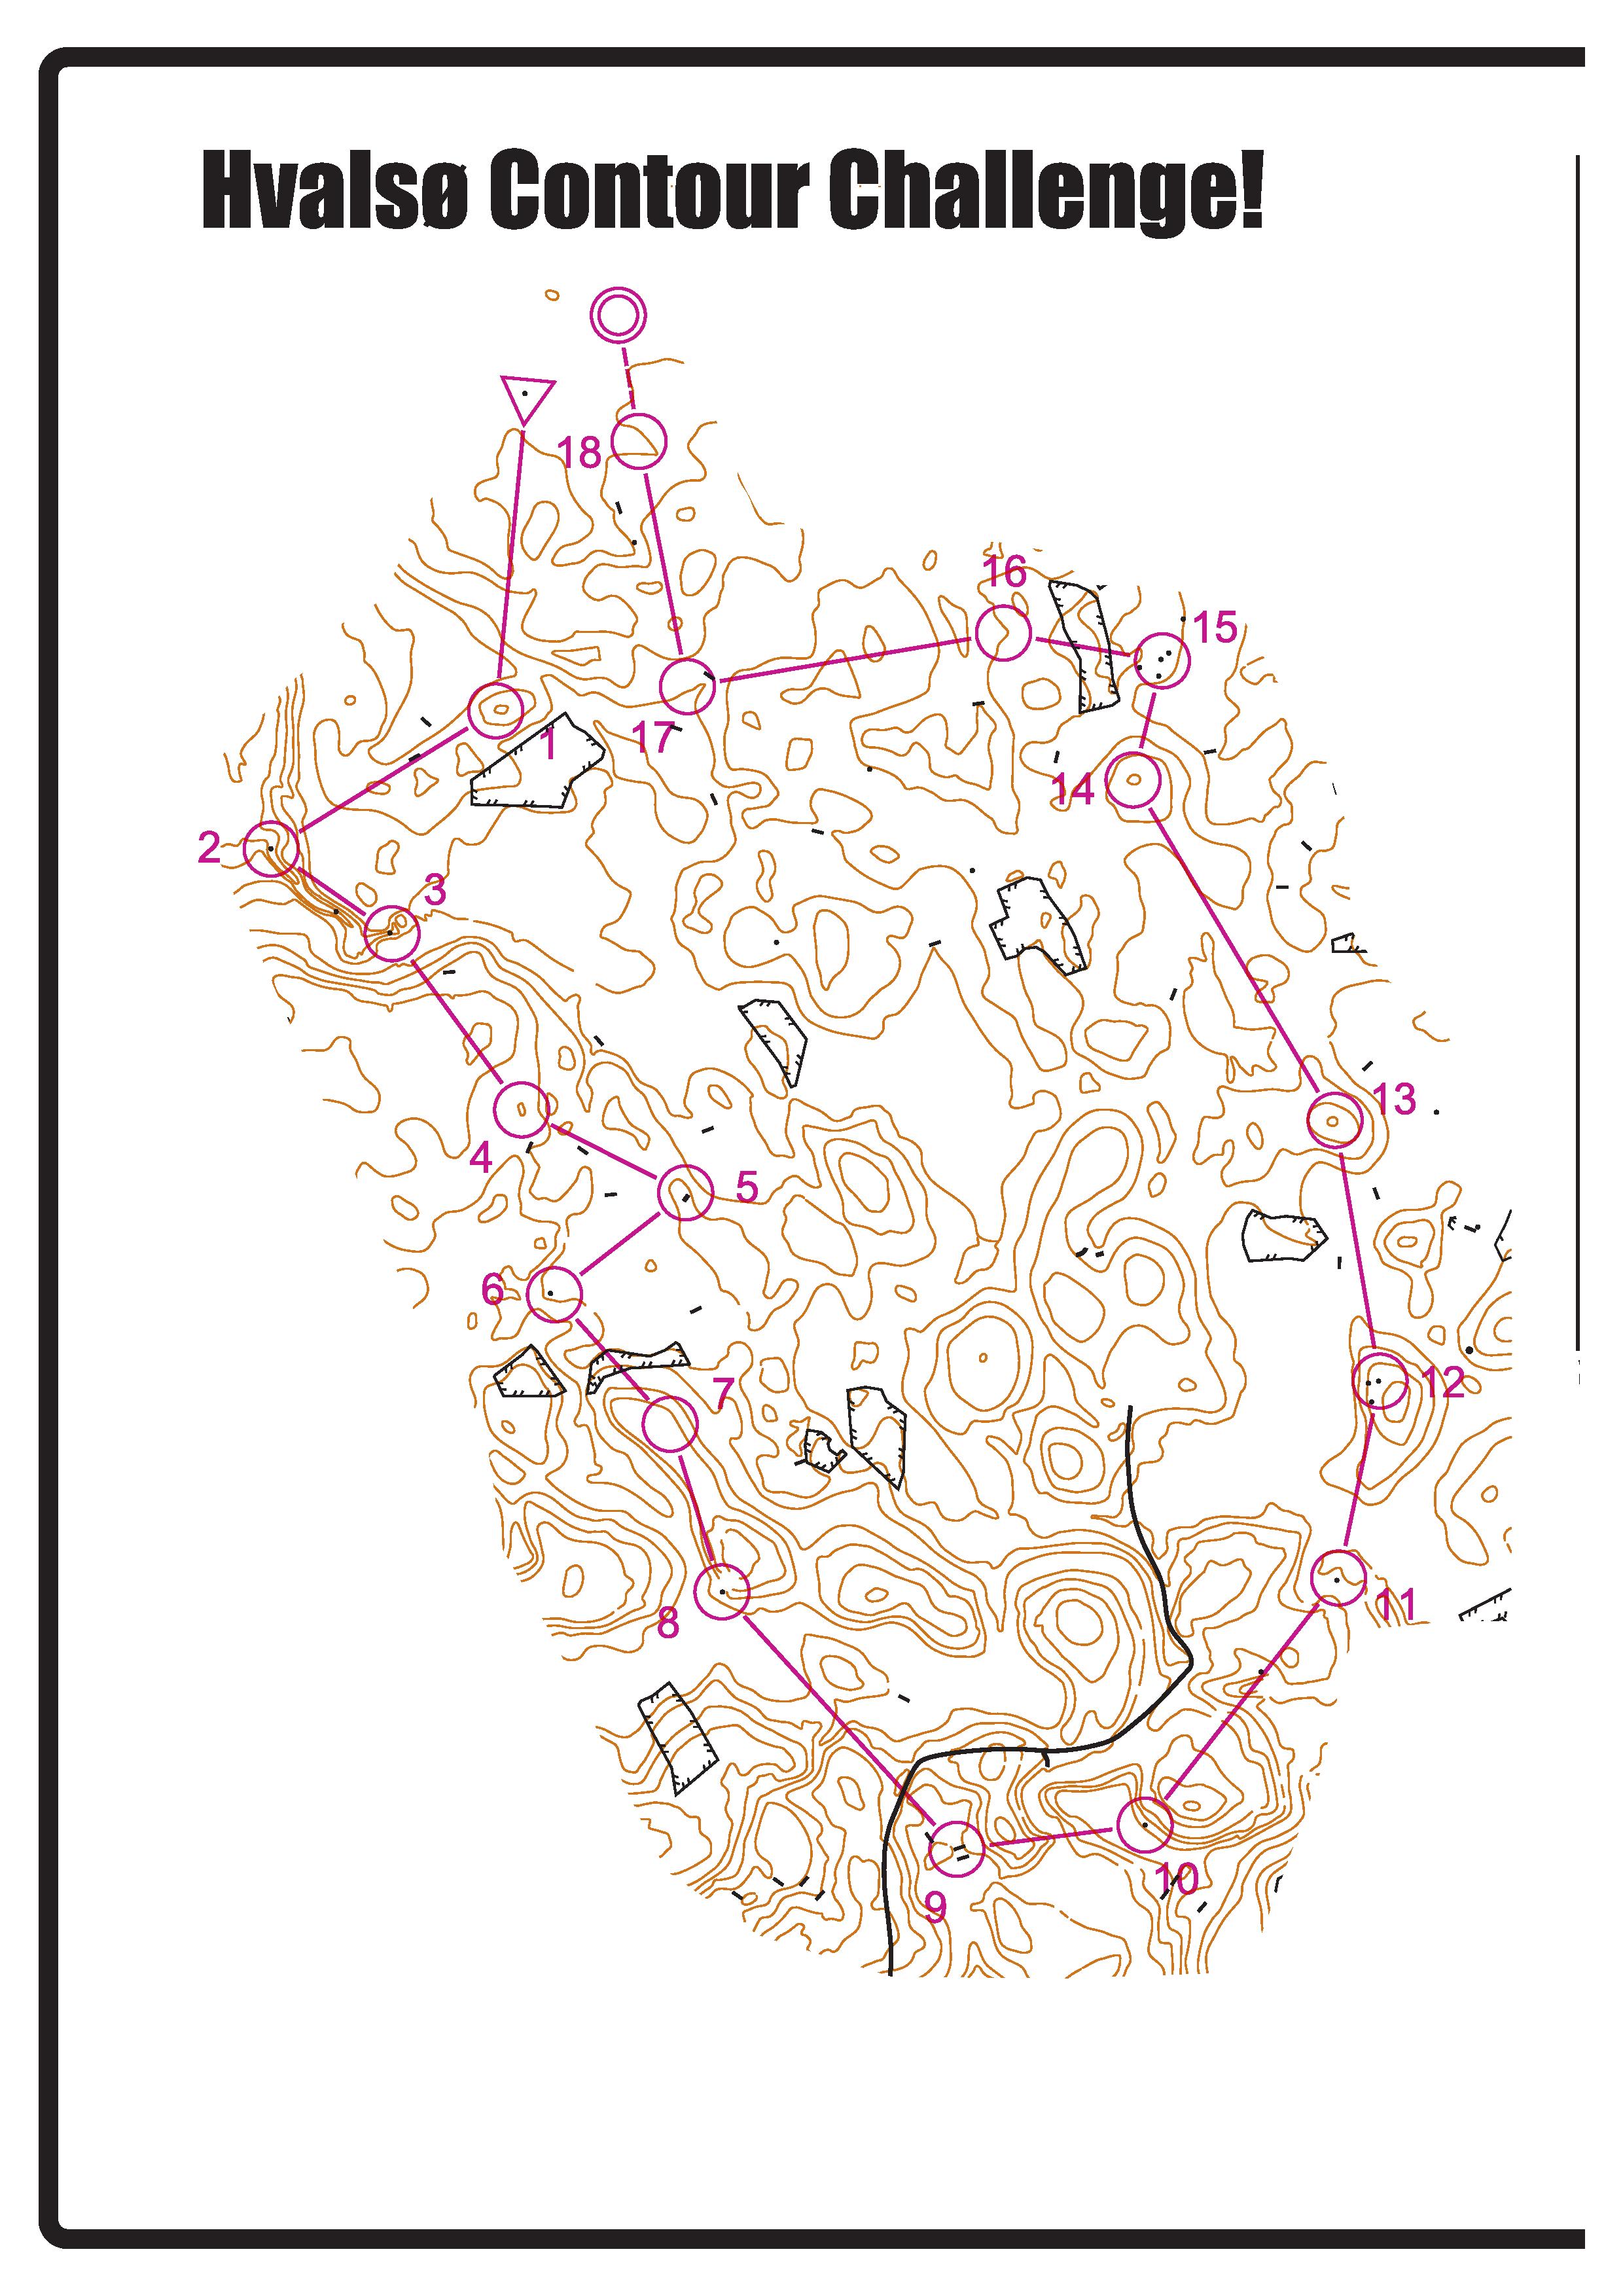 Hvalsø contour challenge (18.02.2017)